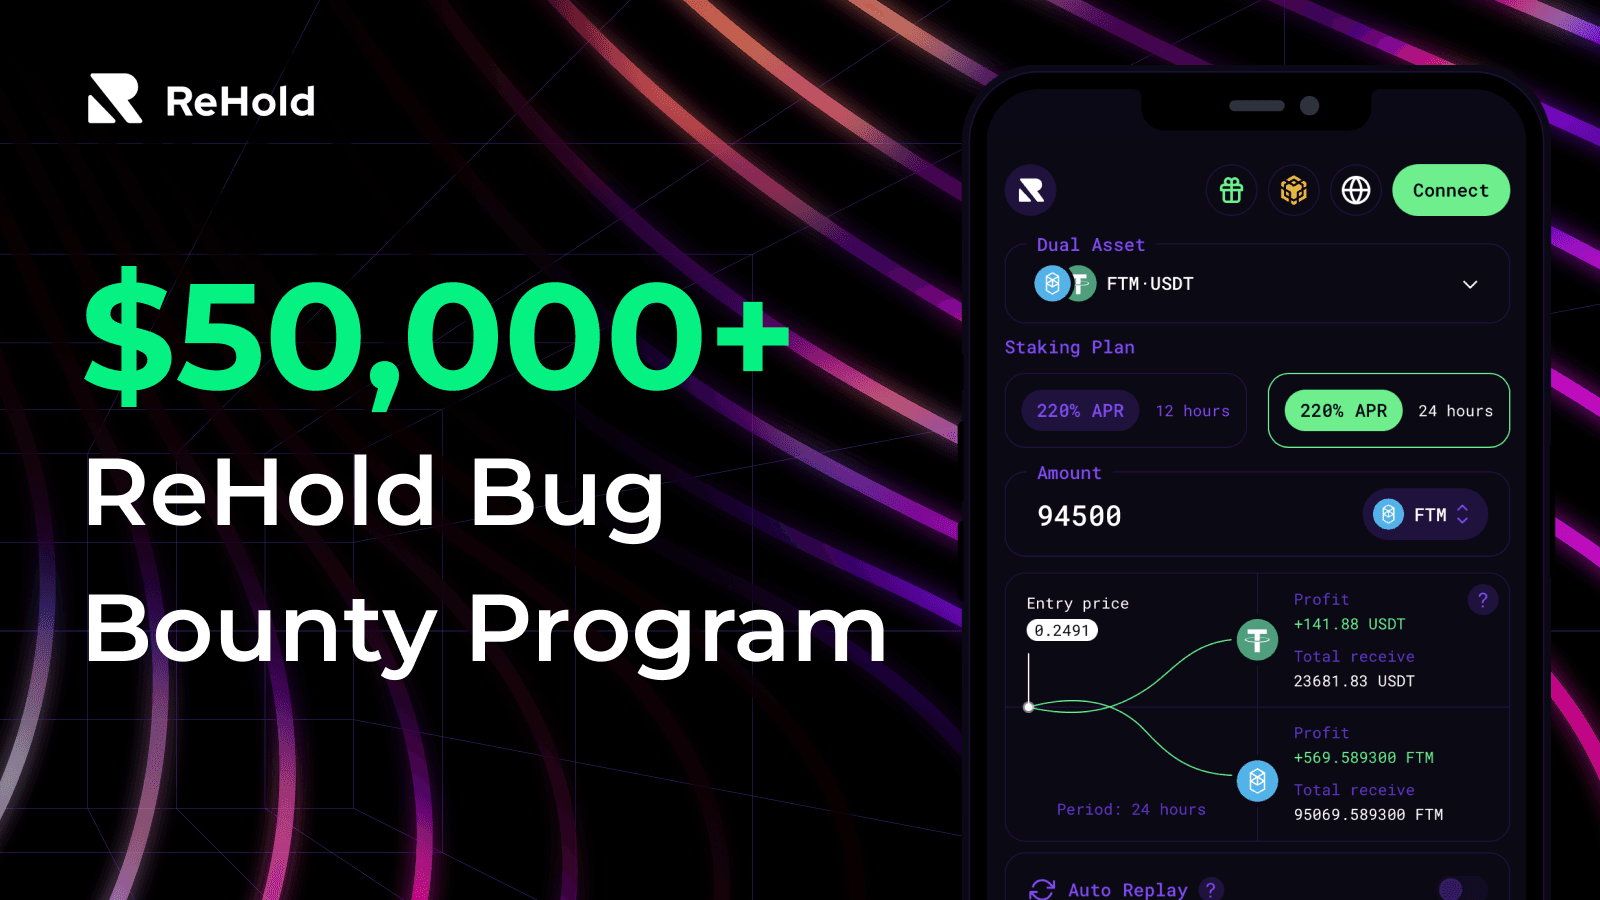 ReHold Bug Bounty Program